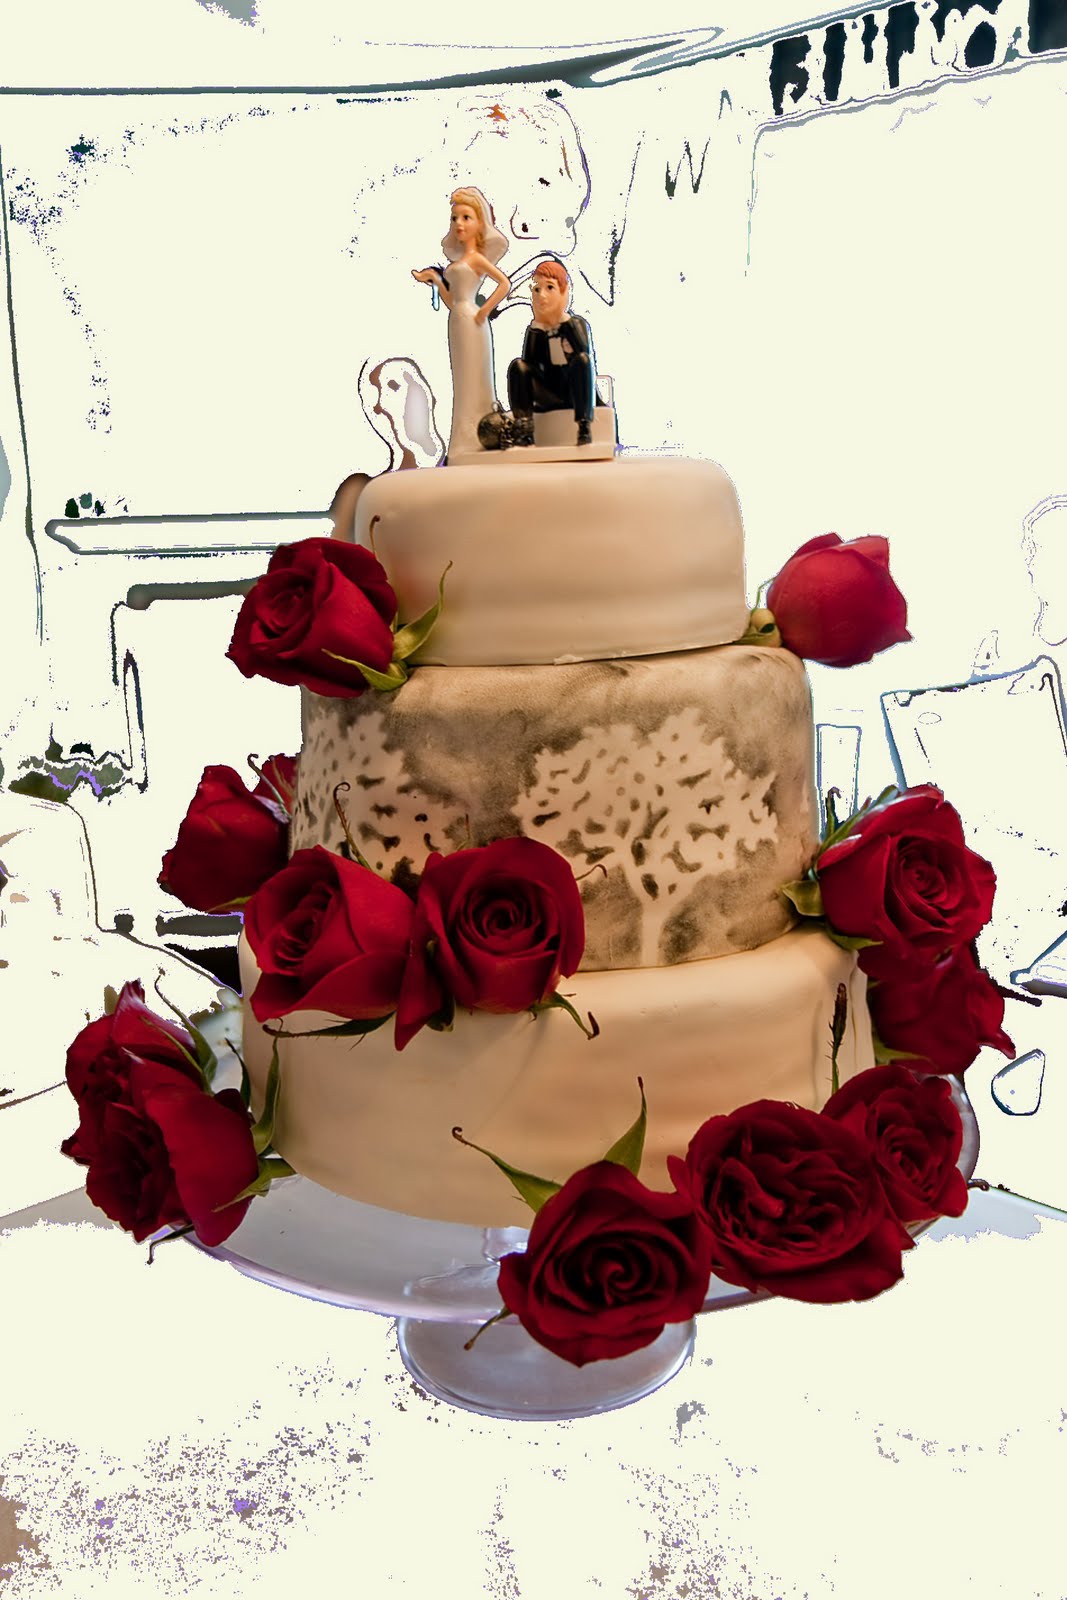 cake boss wedding cake